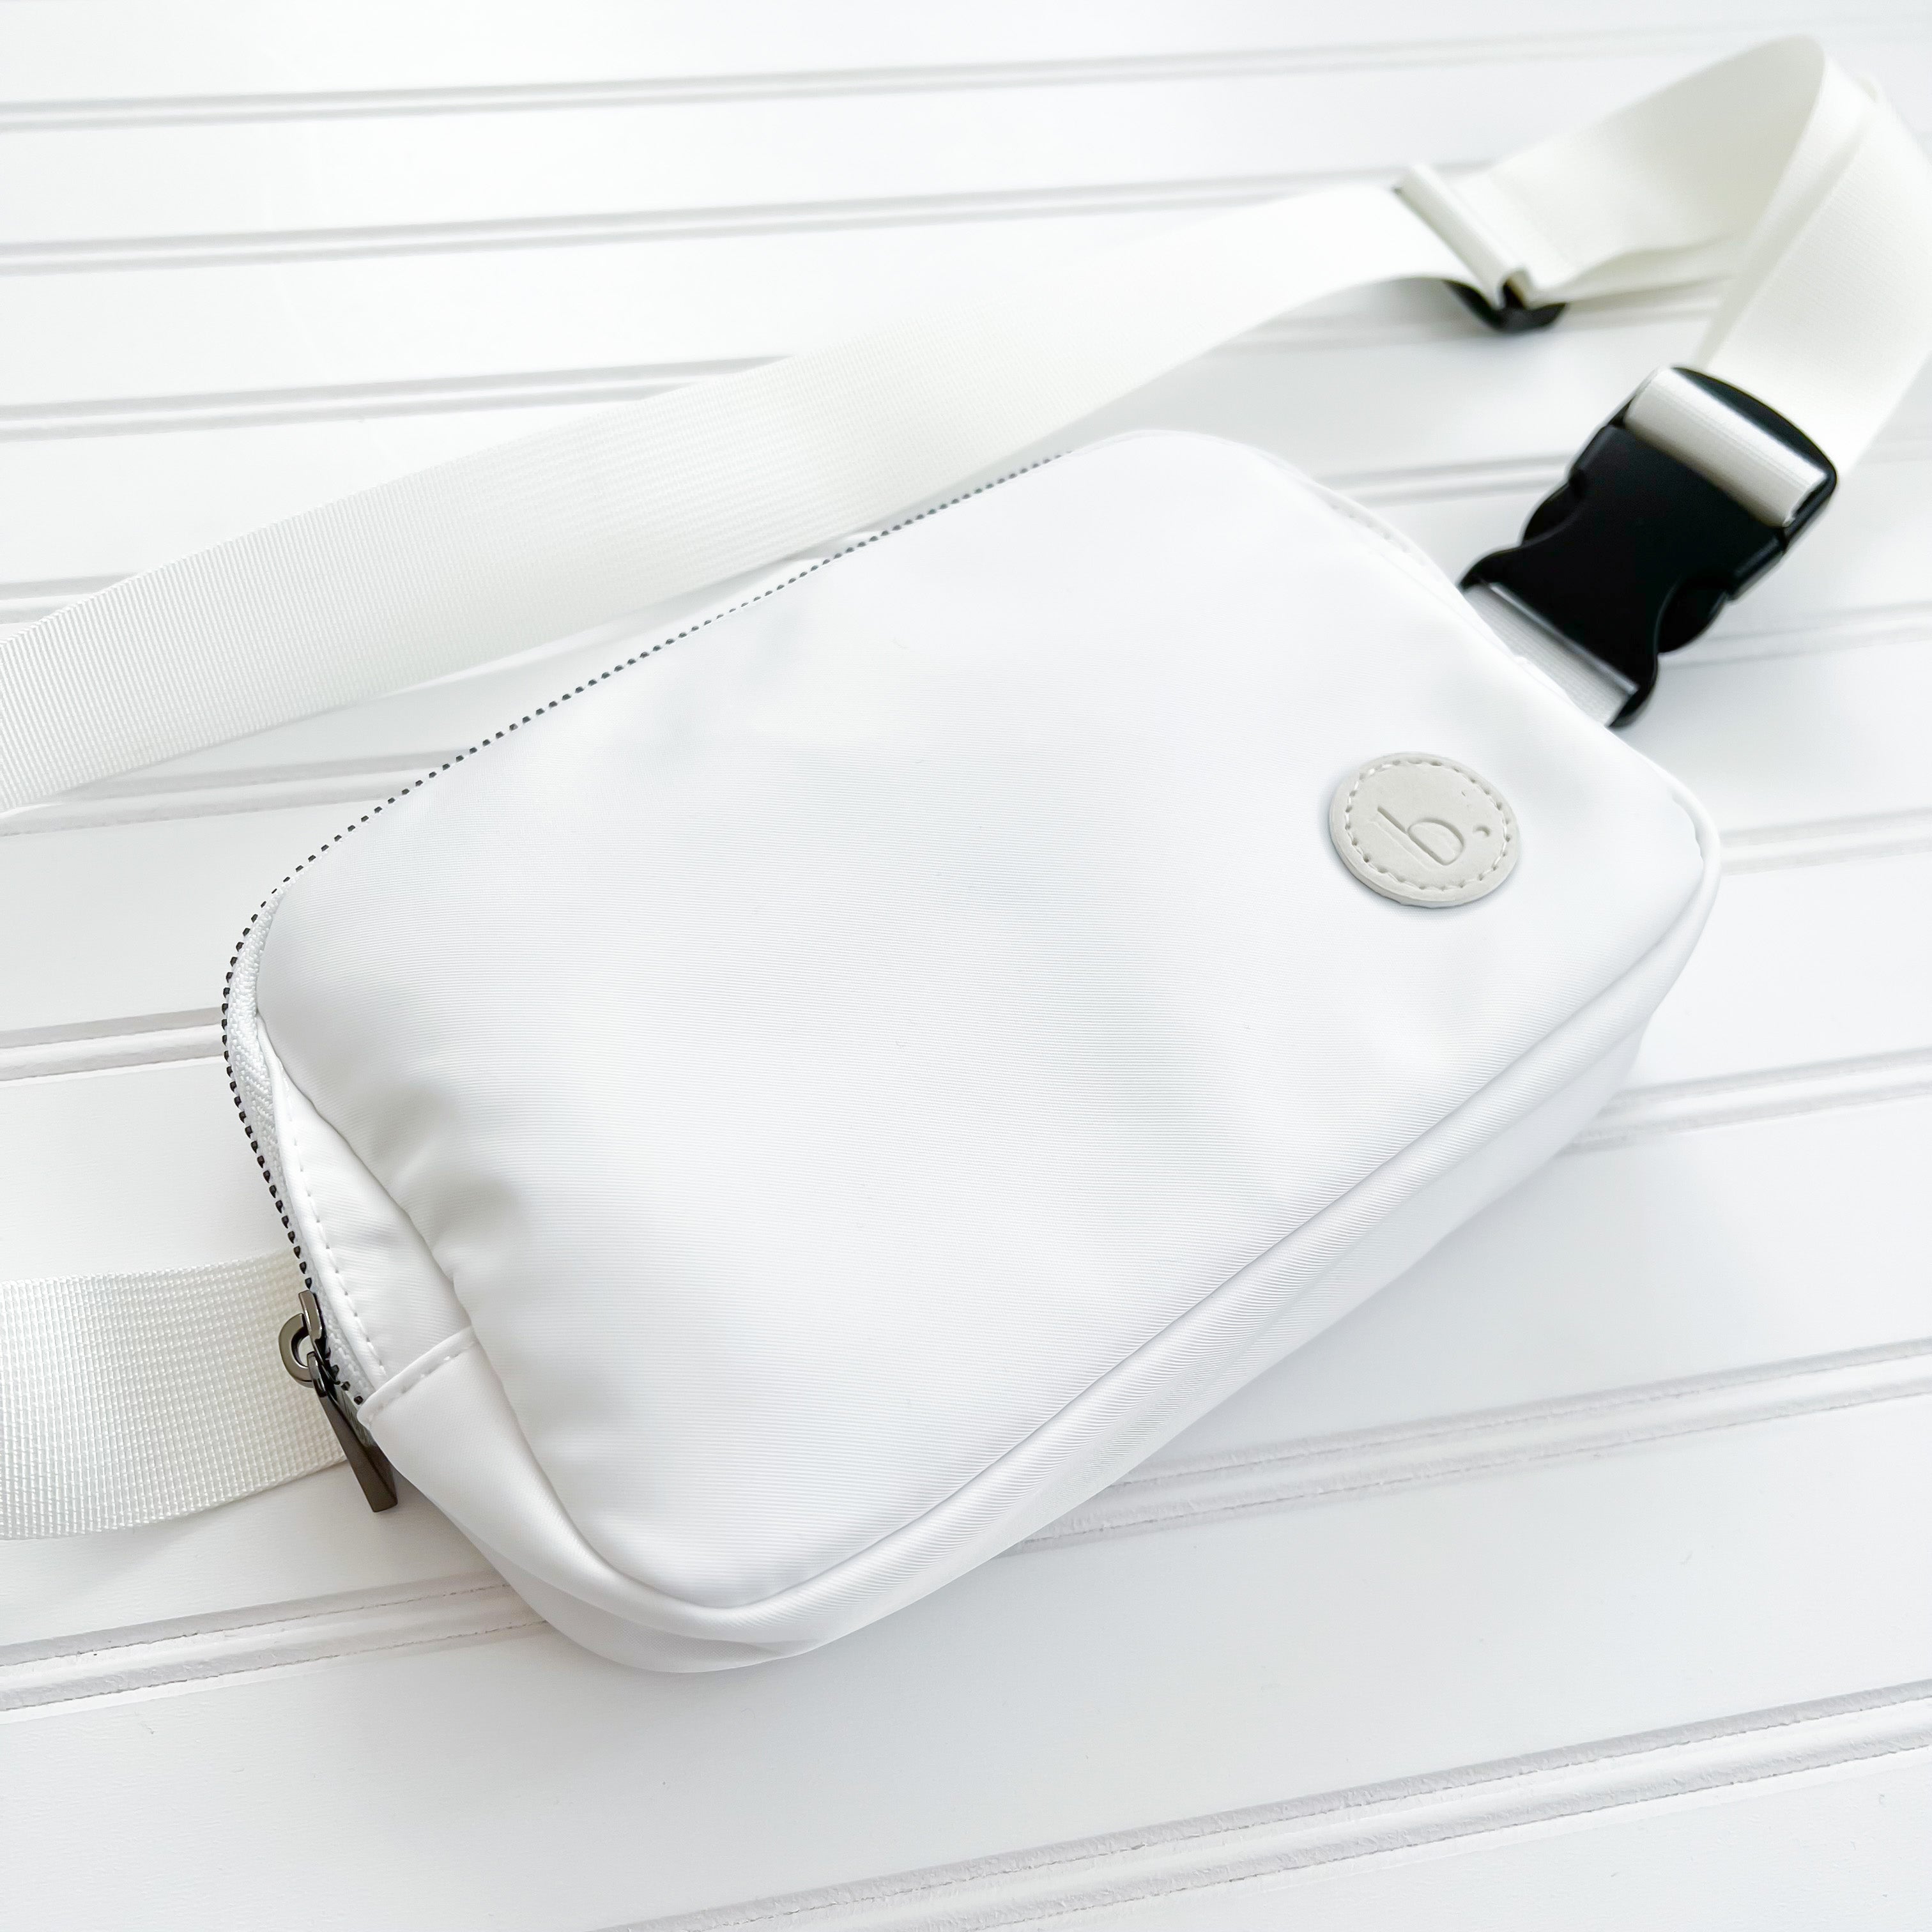 Here's a novel idea: the belt bag as life-changer